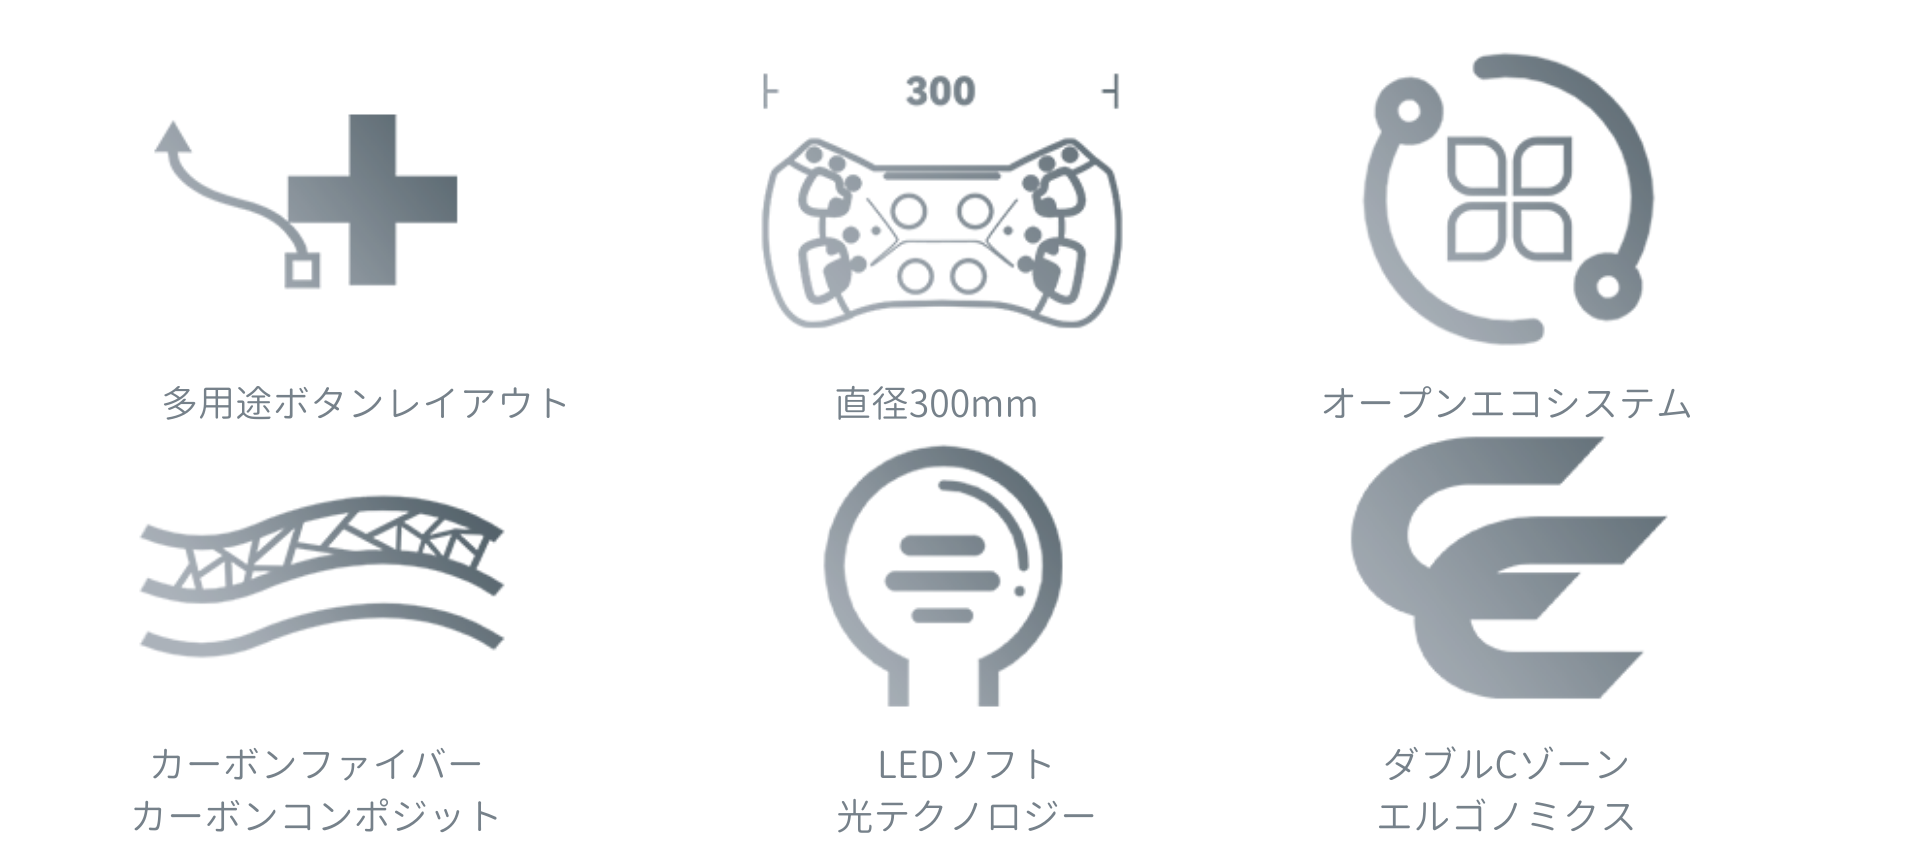 Simagic GT Neo フォーミュラー GT ステアリング 日本正規代理店